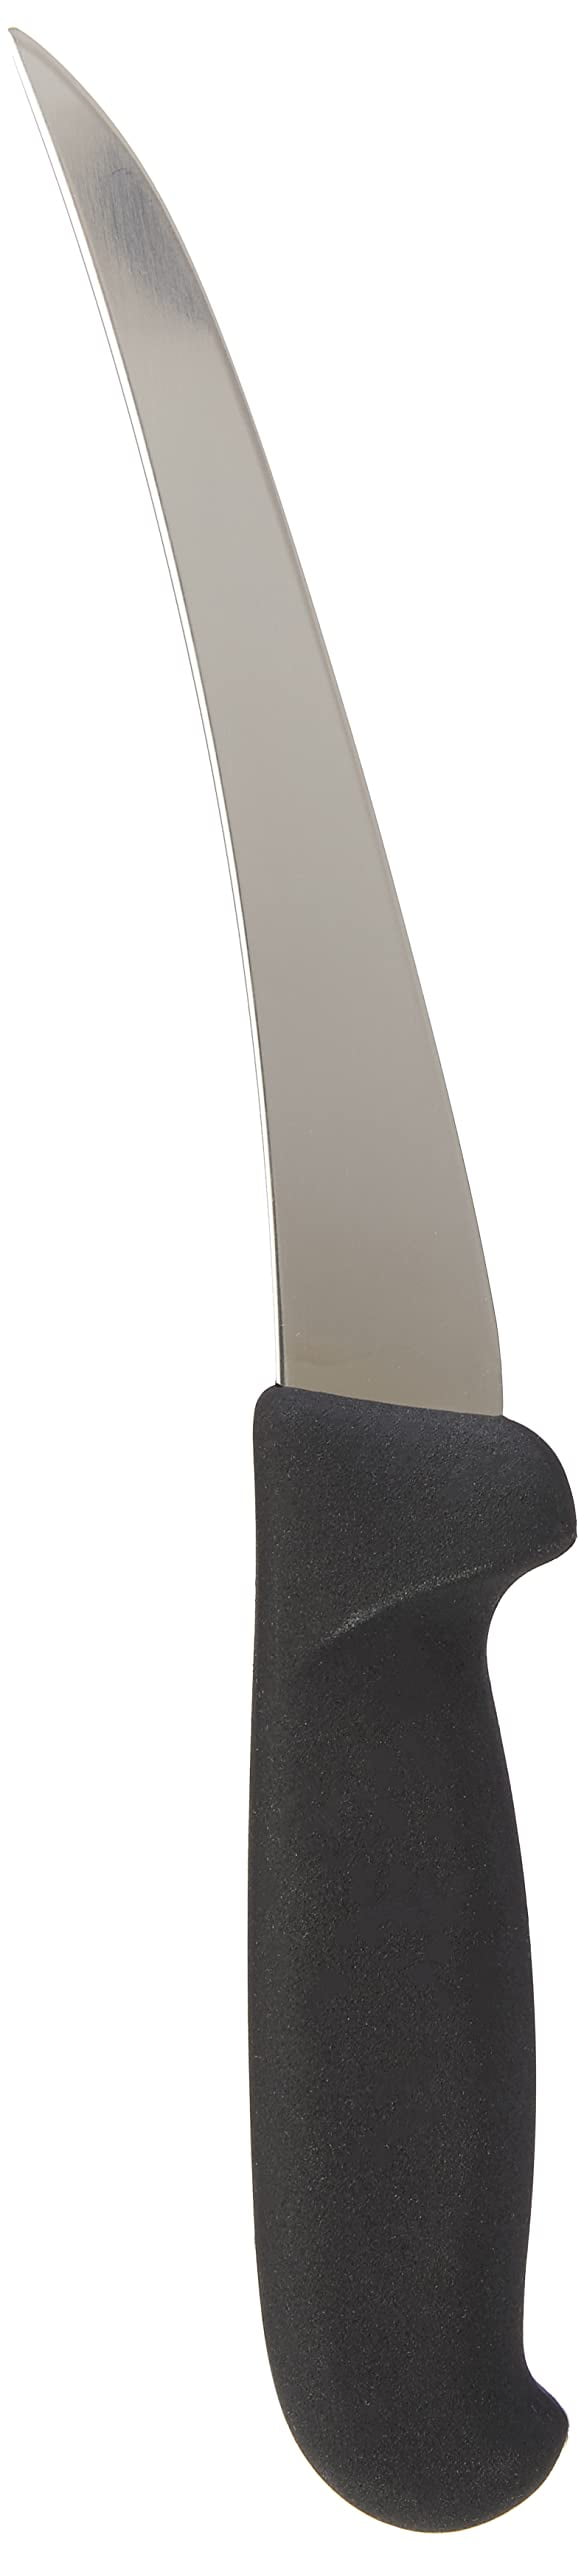 Victorinox Pro 6' Semi-Stiff Curved Boning Knife - Smoky Mountain